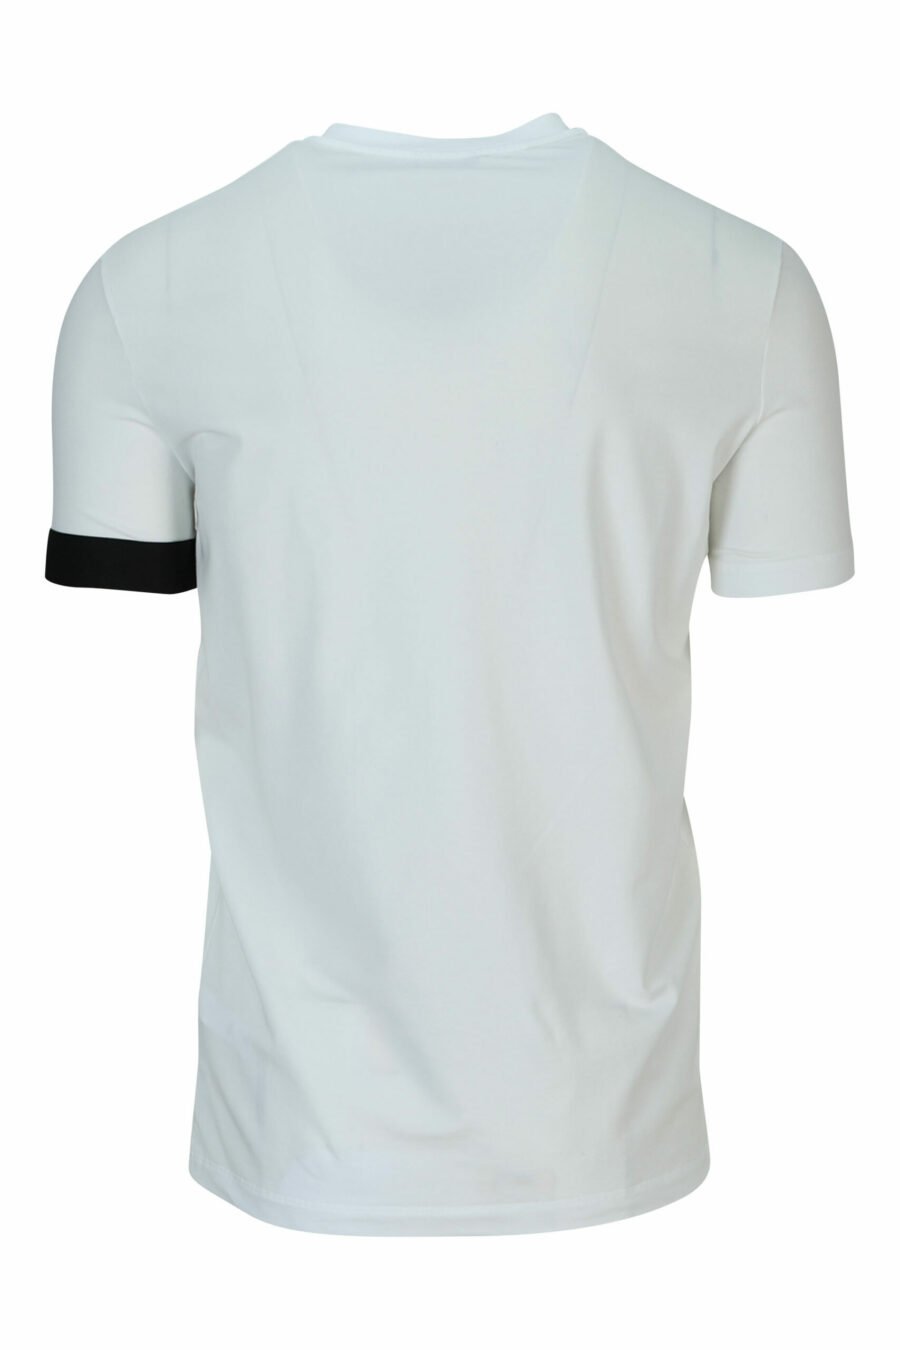 Camiseta blanca con logo negro - 8032674767493 2 scaled